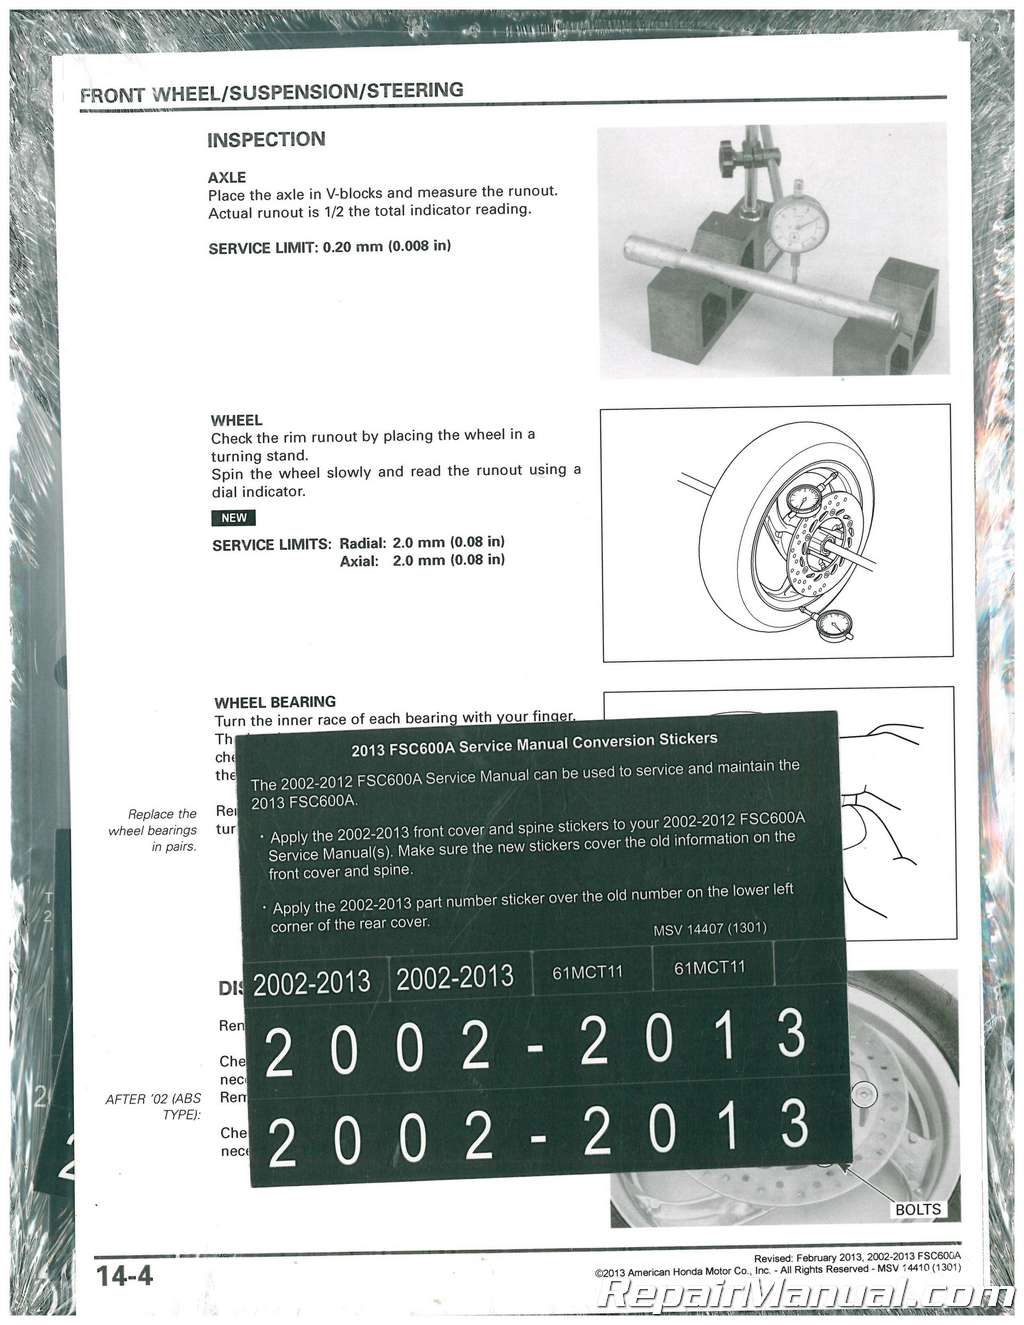 Honda 2002-2013 Silverwing Silver wing FSC600 service manual in binder